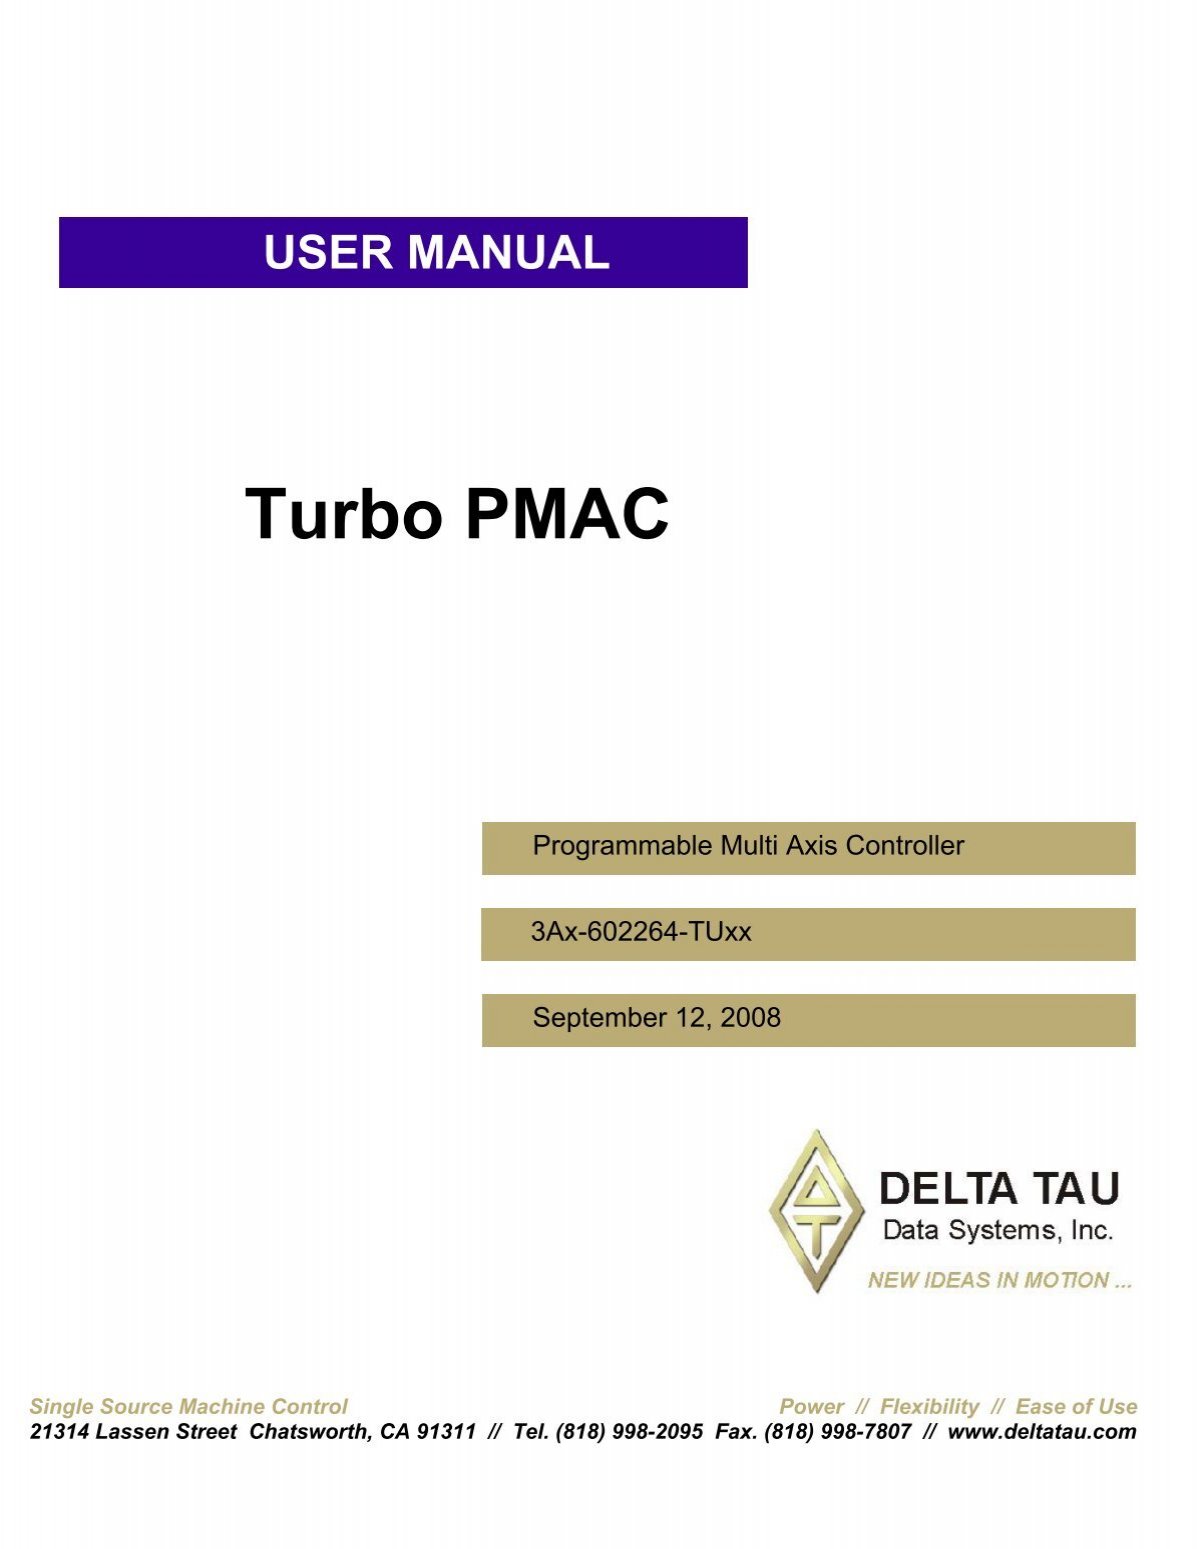 Turbo PMAC User Manual - Delta Tau